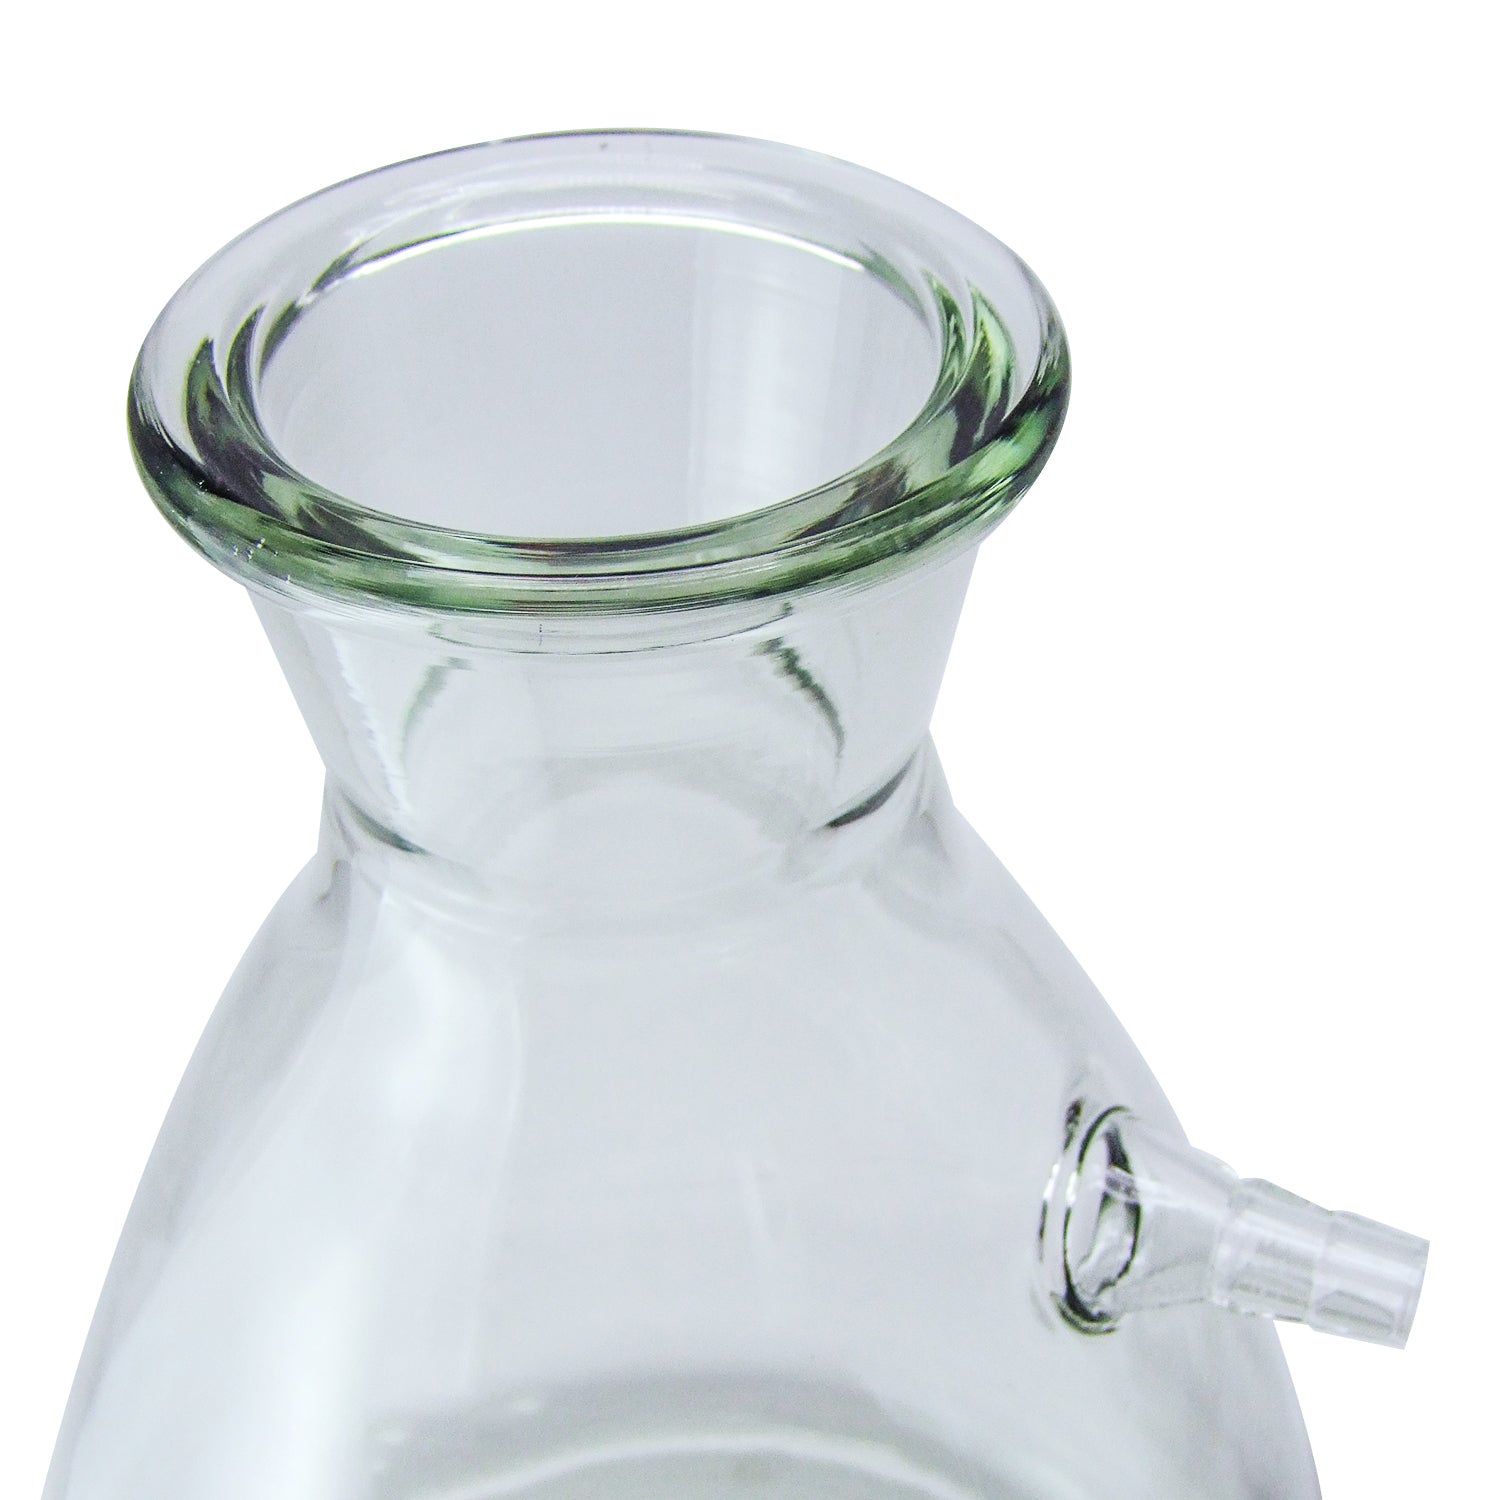 Filtering Flasks with Sidearm Tubulation Vacuum Flask